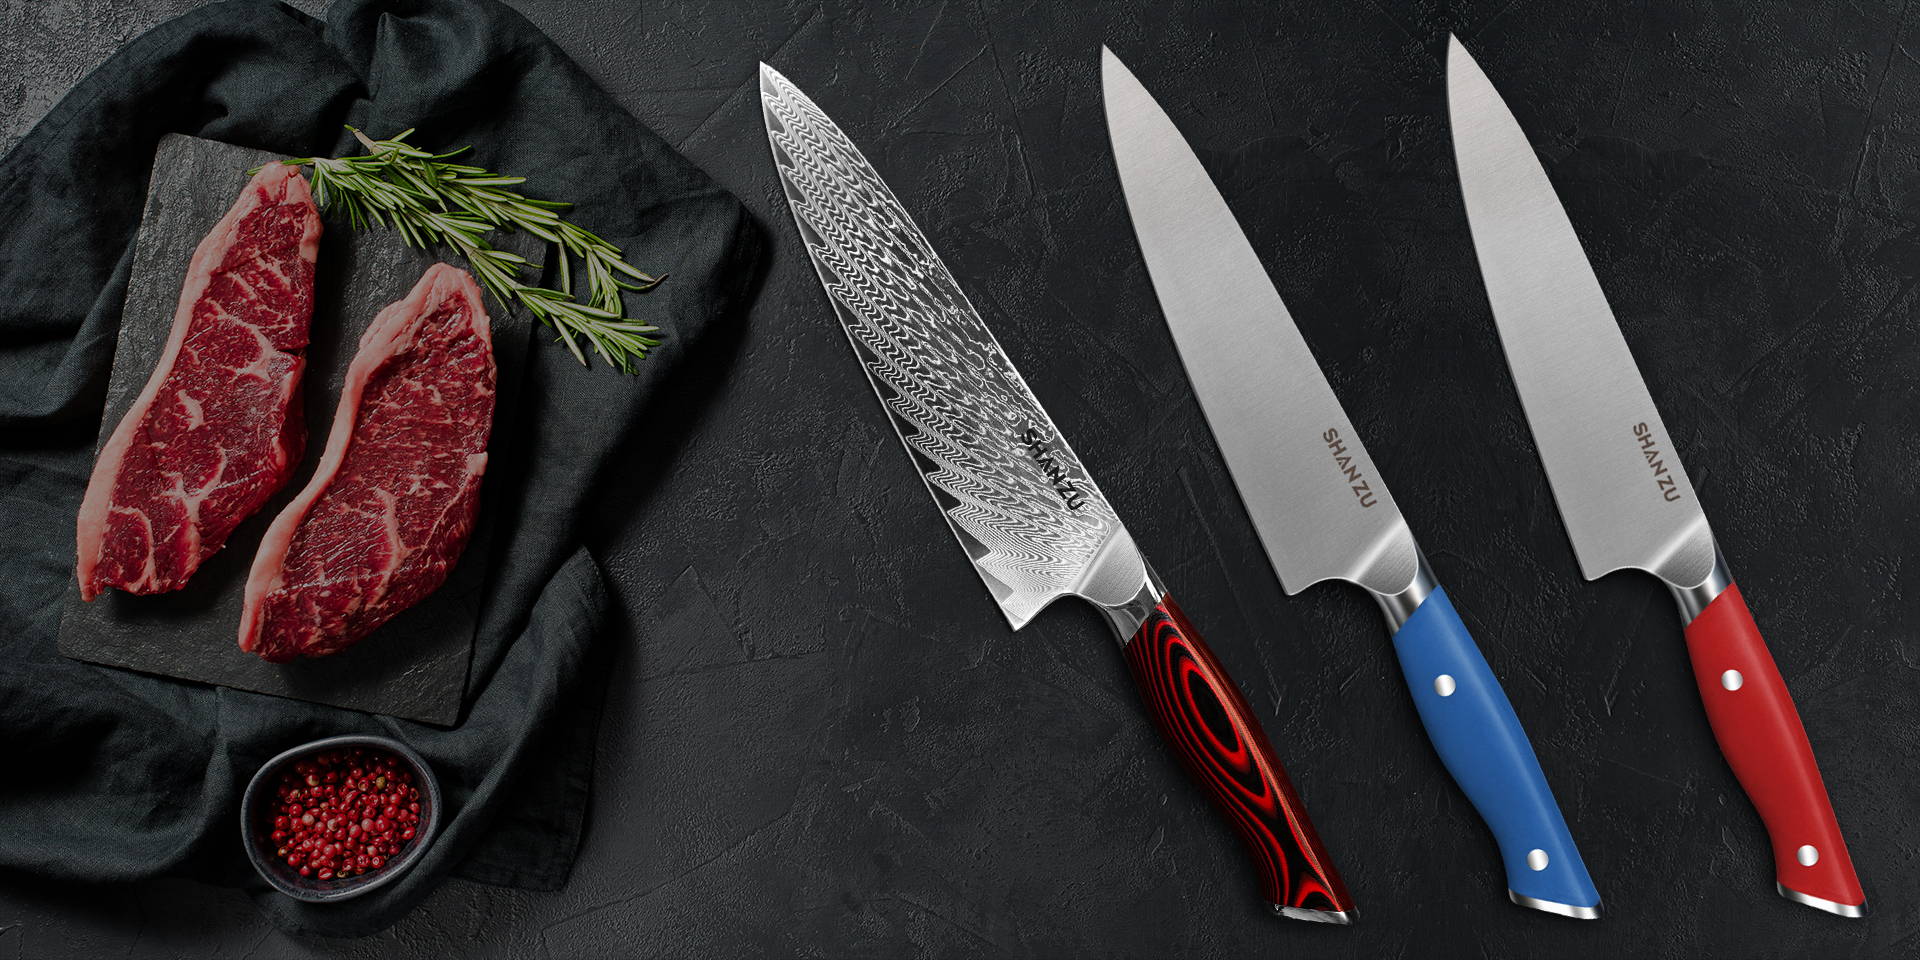 Shan Zu Chef's Knife Damascus Steel 